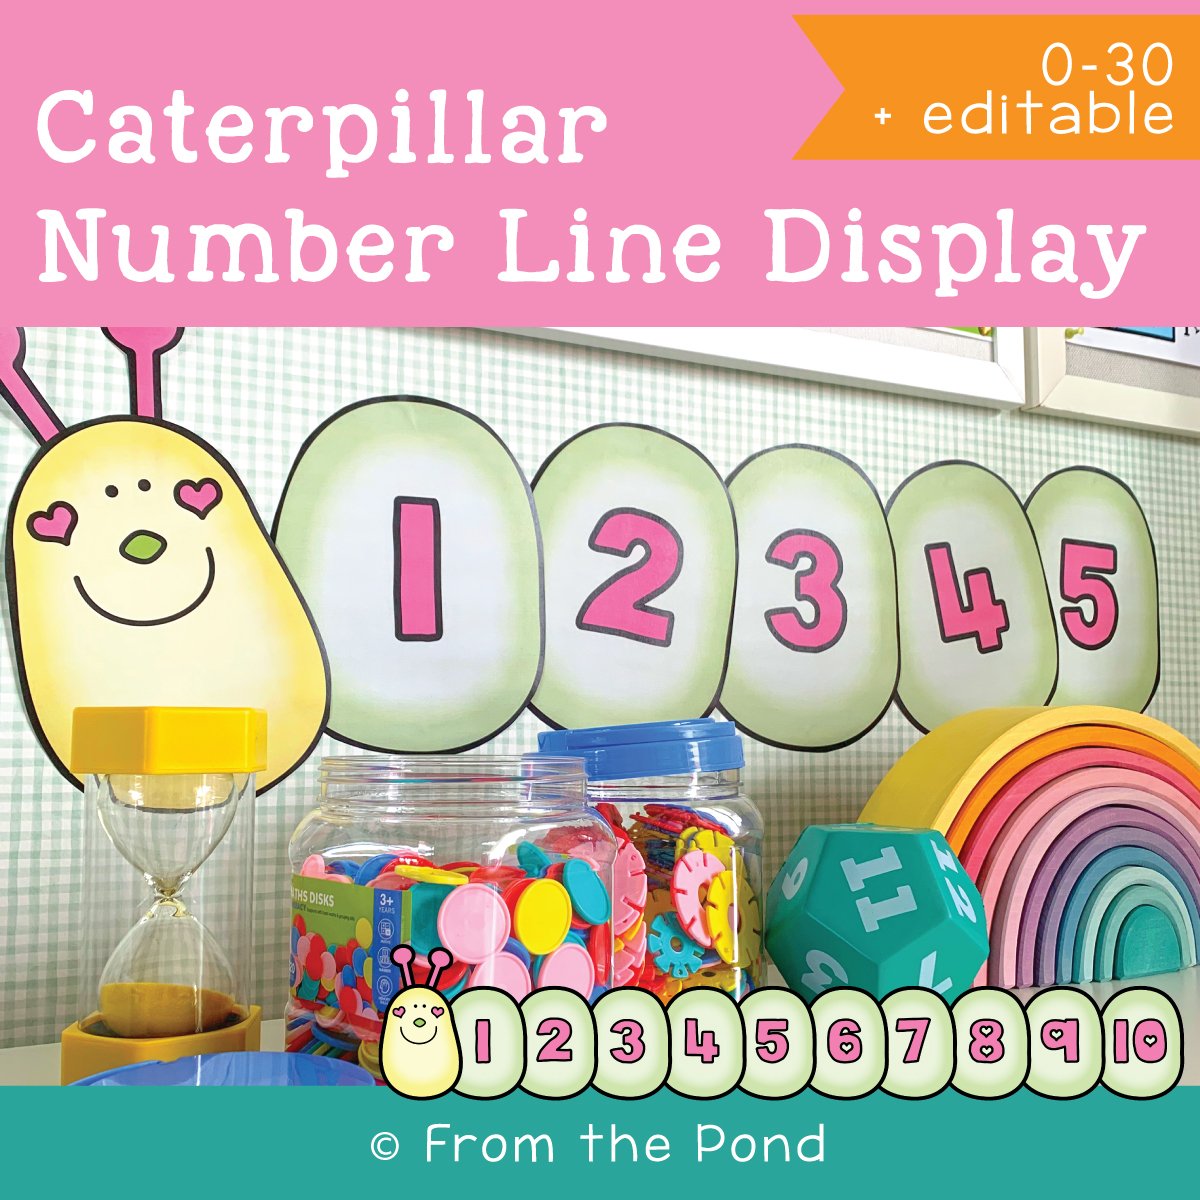 Caterpillar Number Line